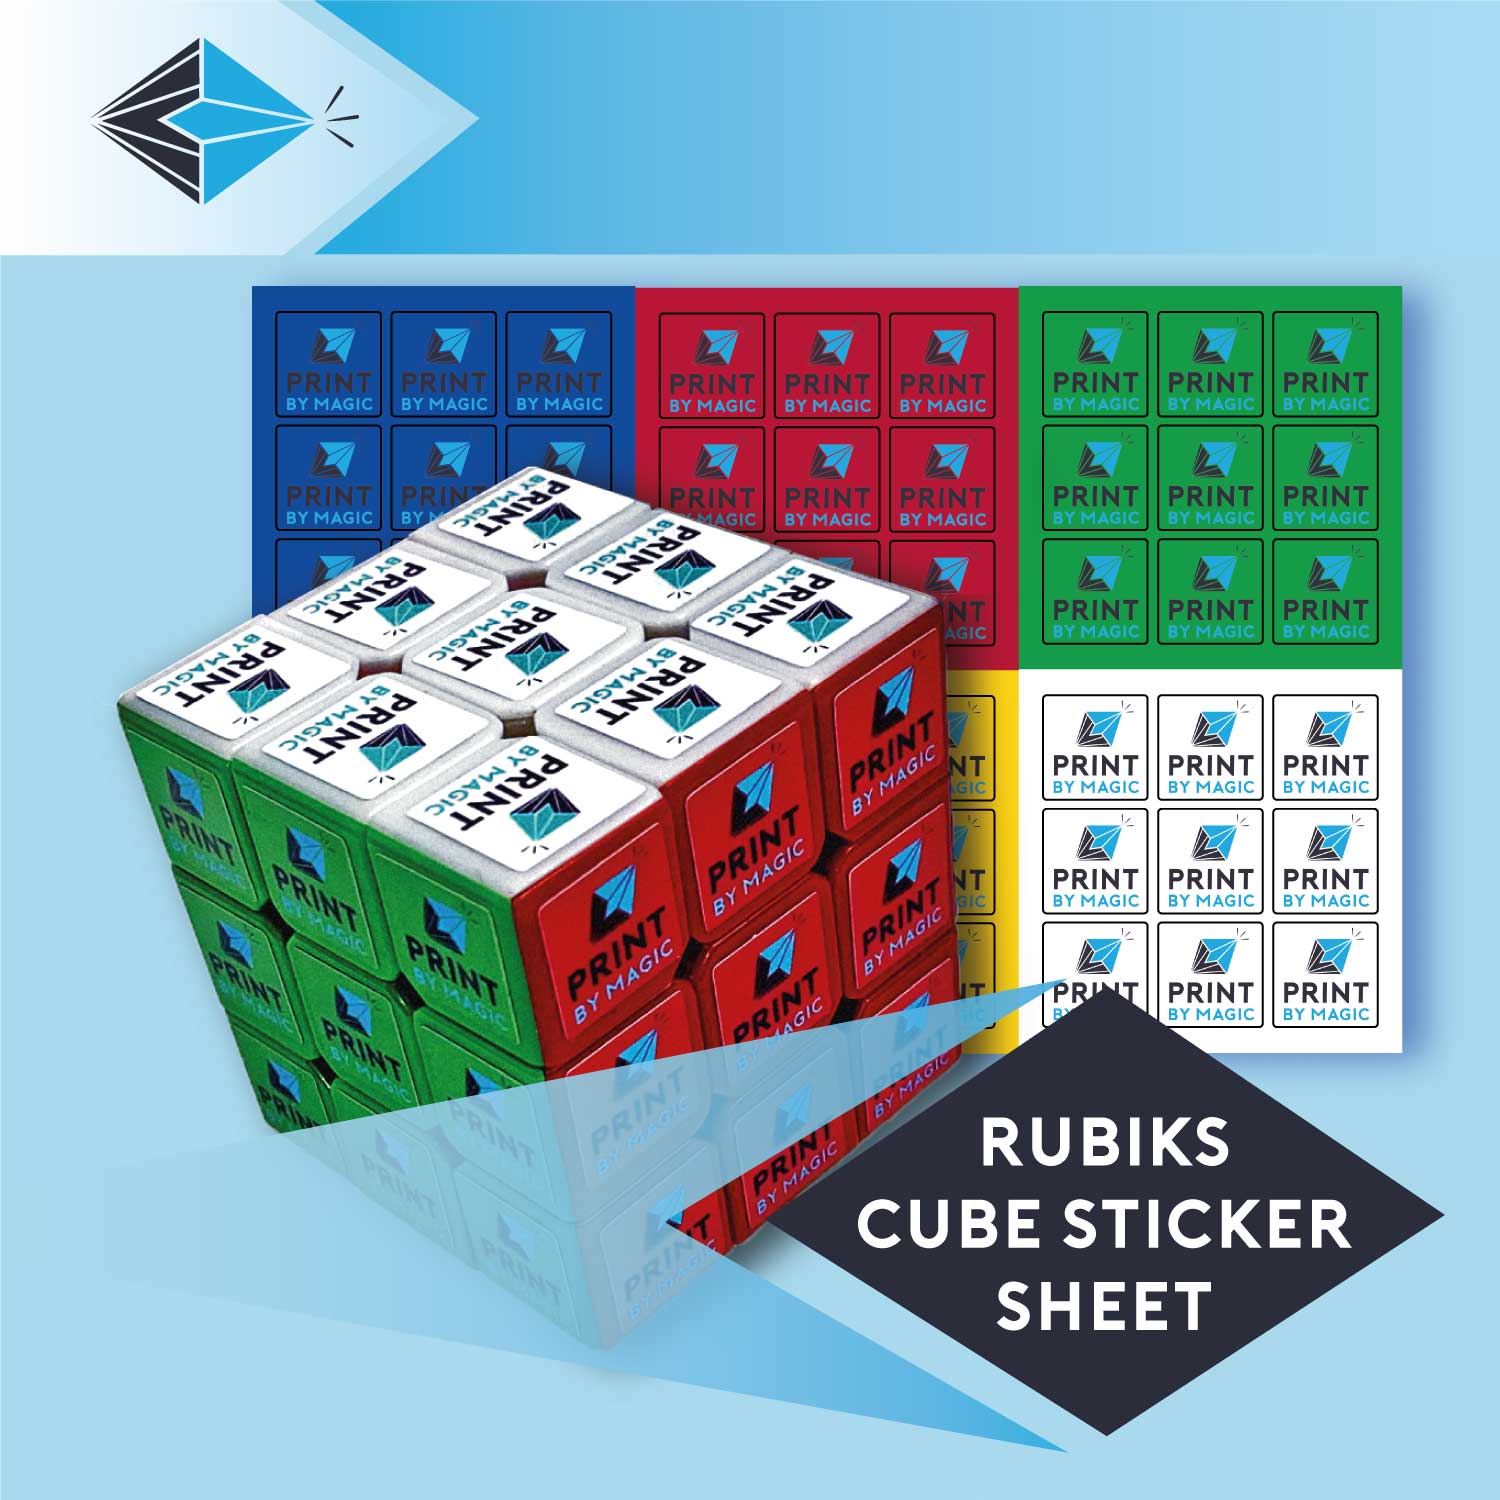 Rubik's Cube Stickers - Custom Printed Vinyl Stickers